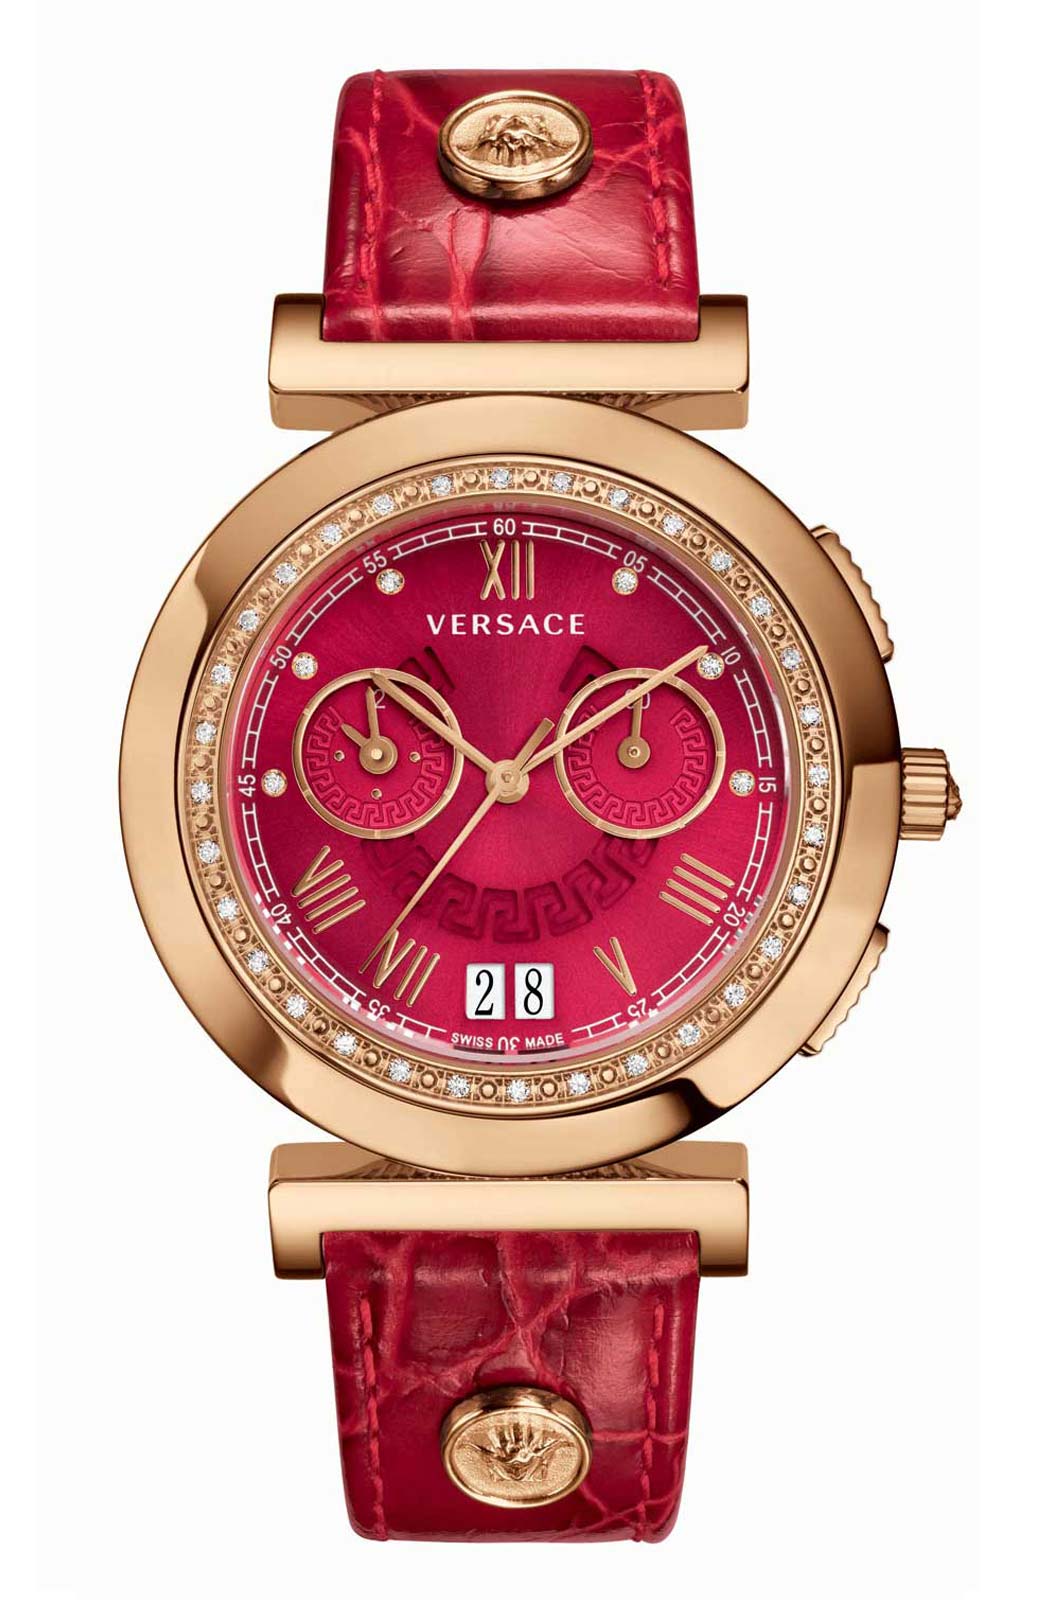 Versace QUARTZ watch 5020B RED